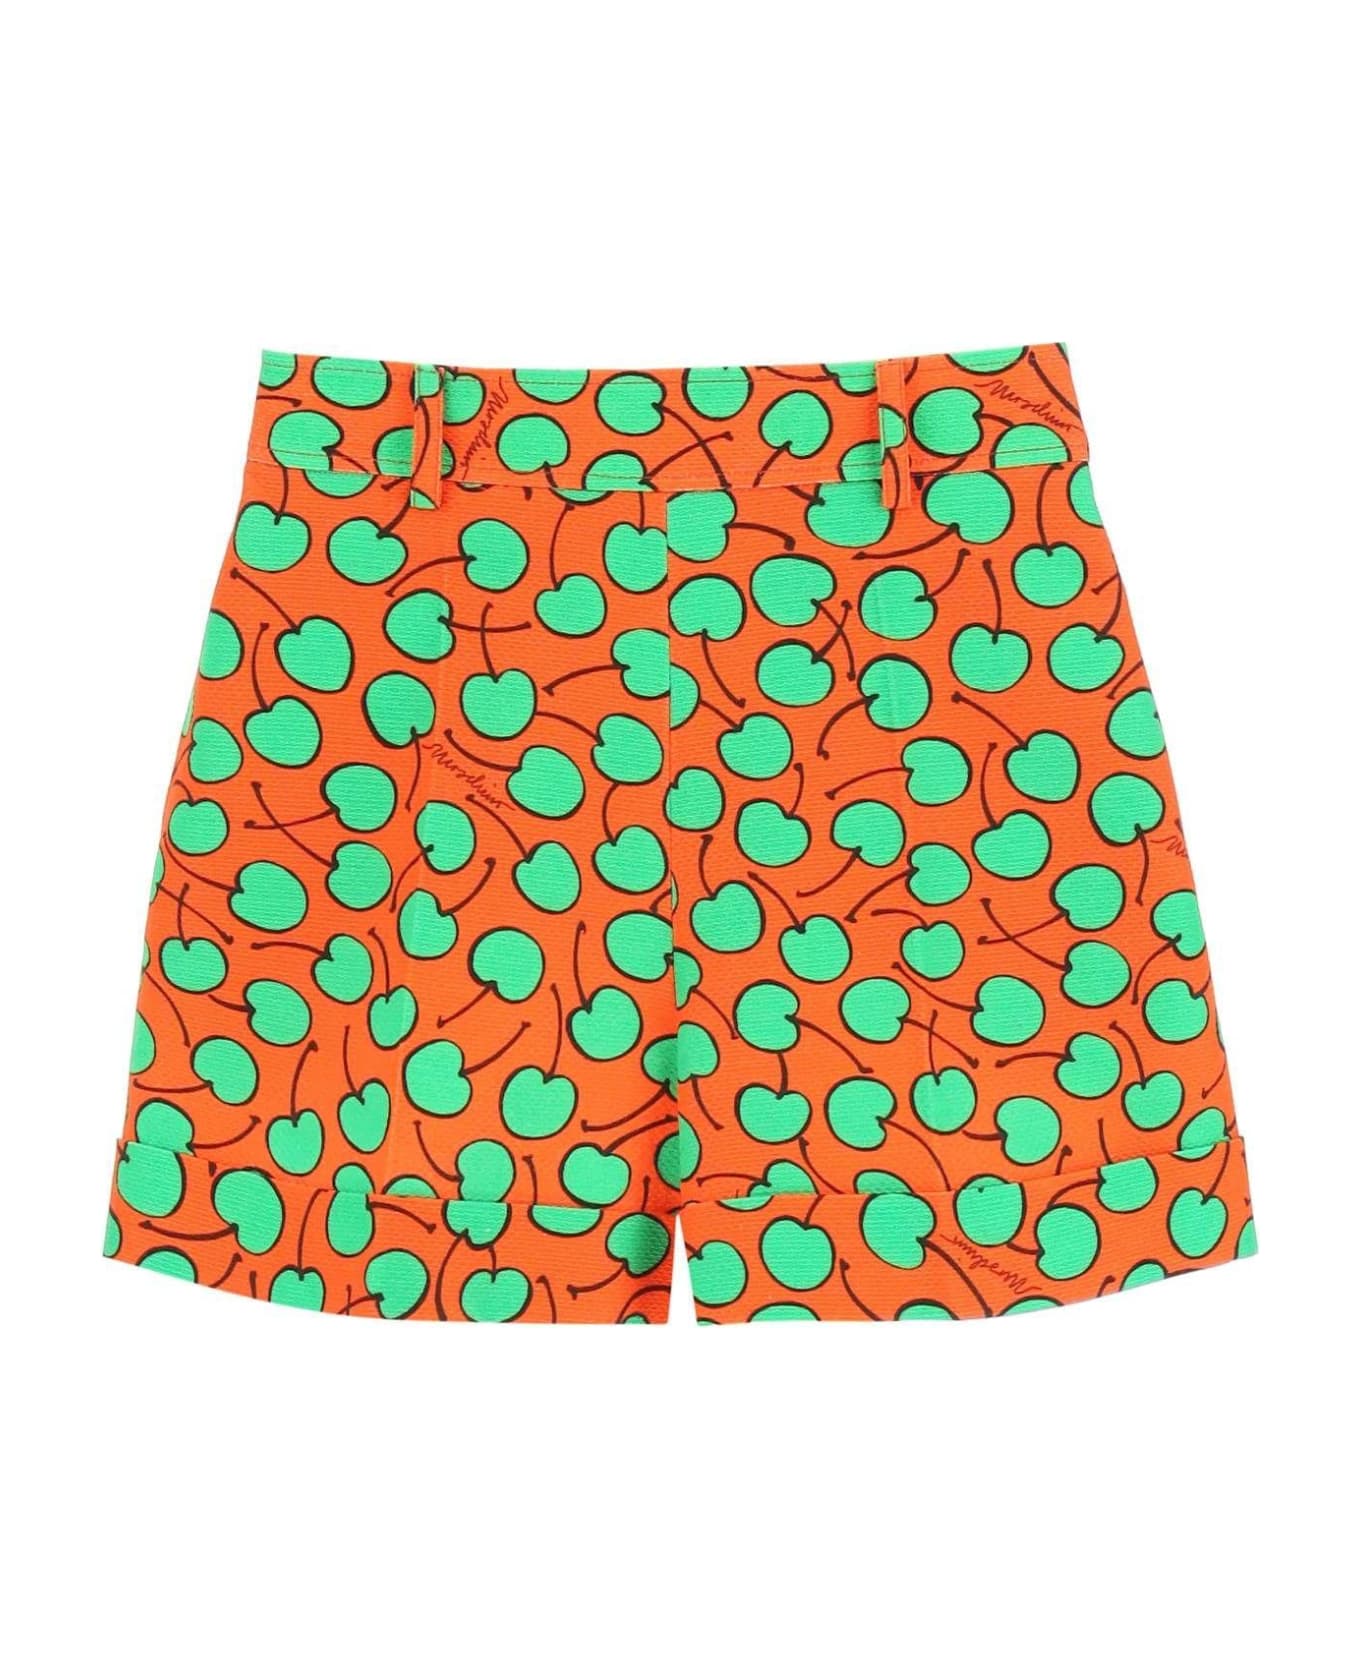 Moschino Cherry Print Piquet Shorts - ORANGE/GREEN